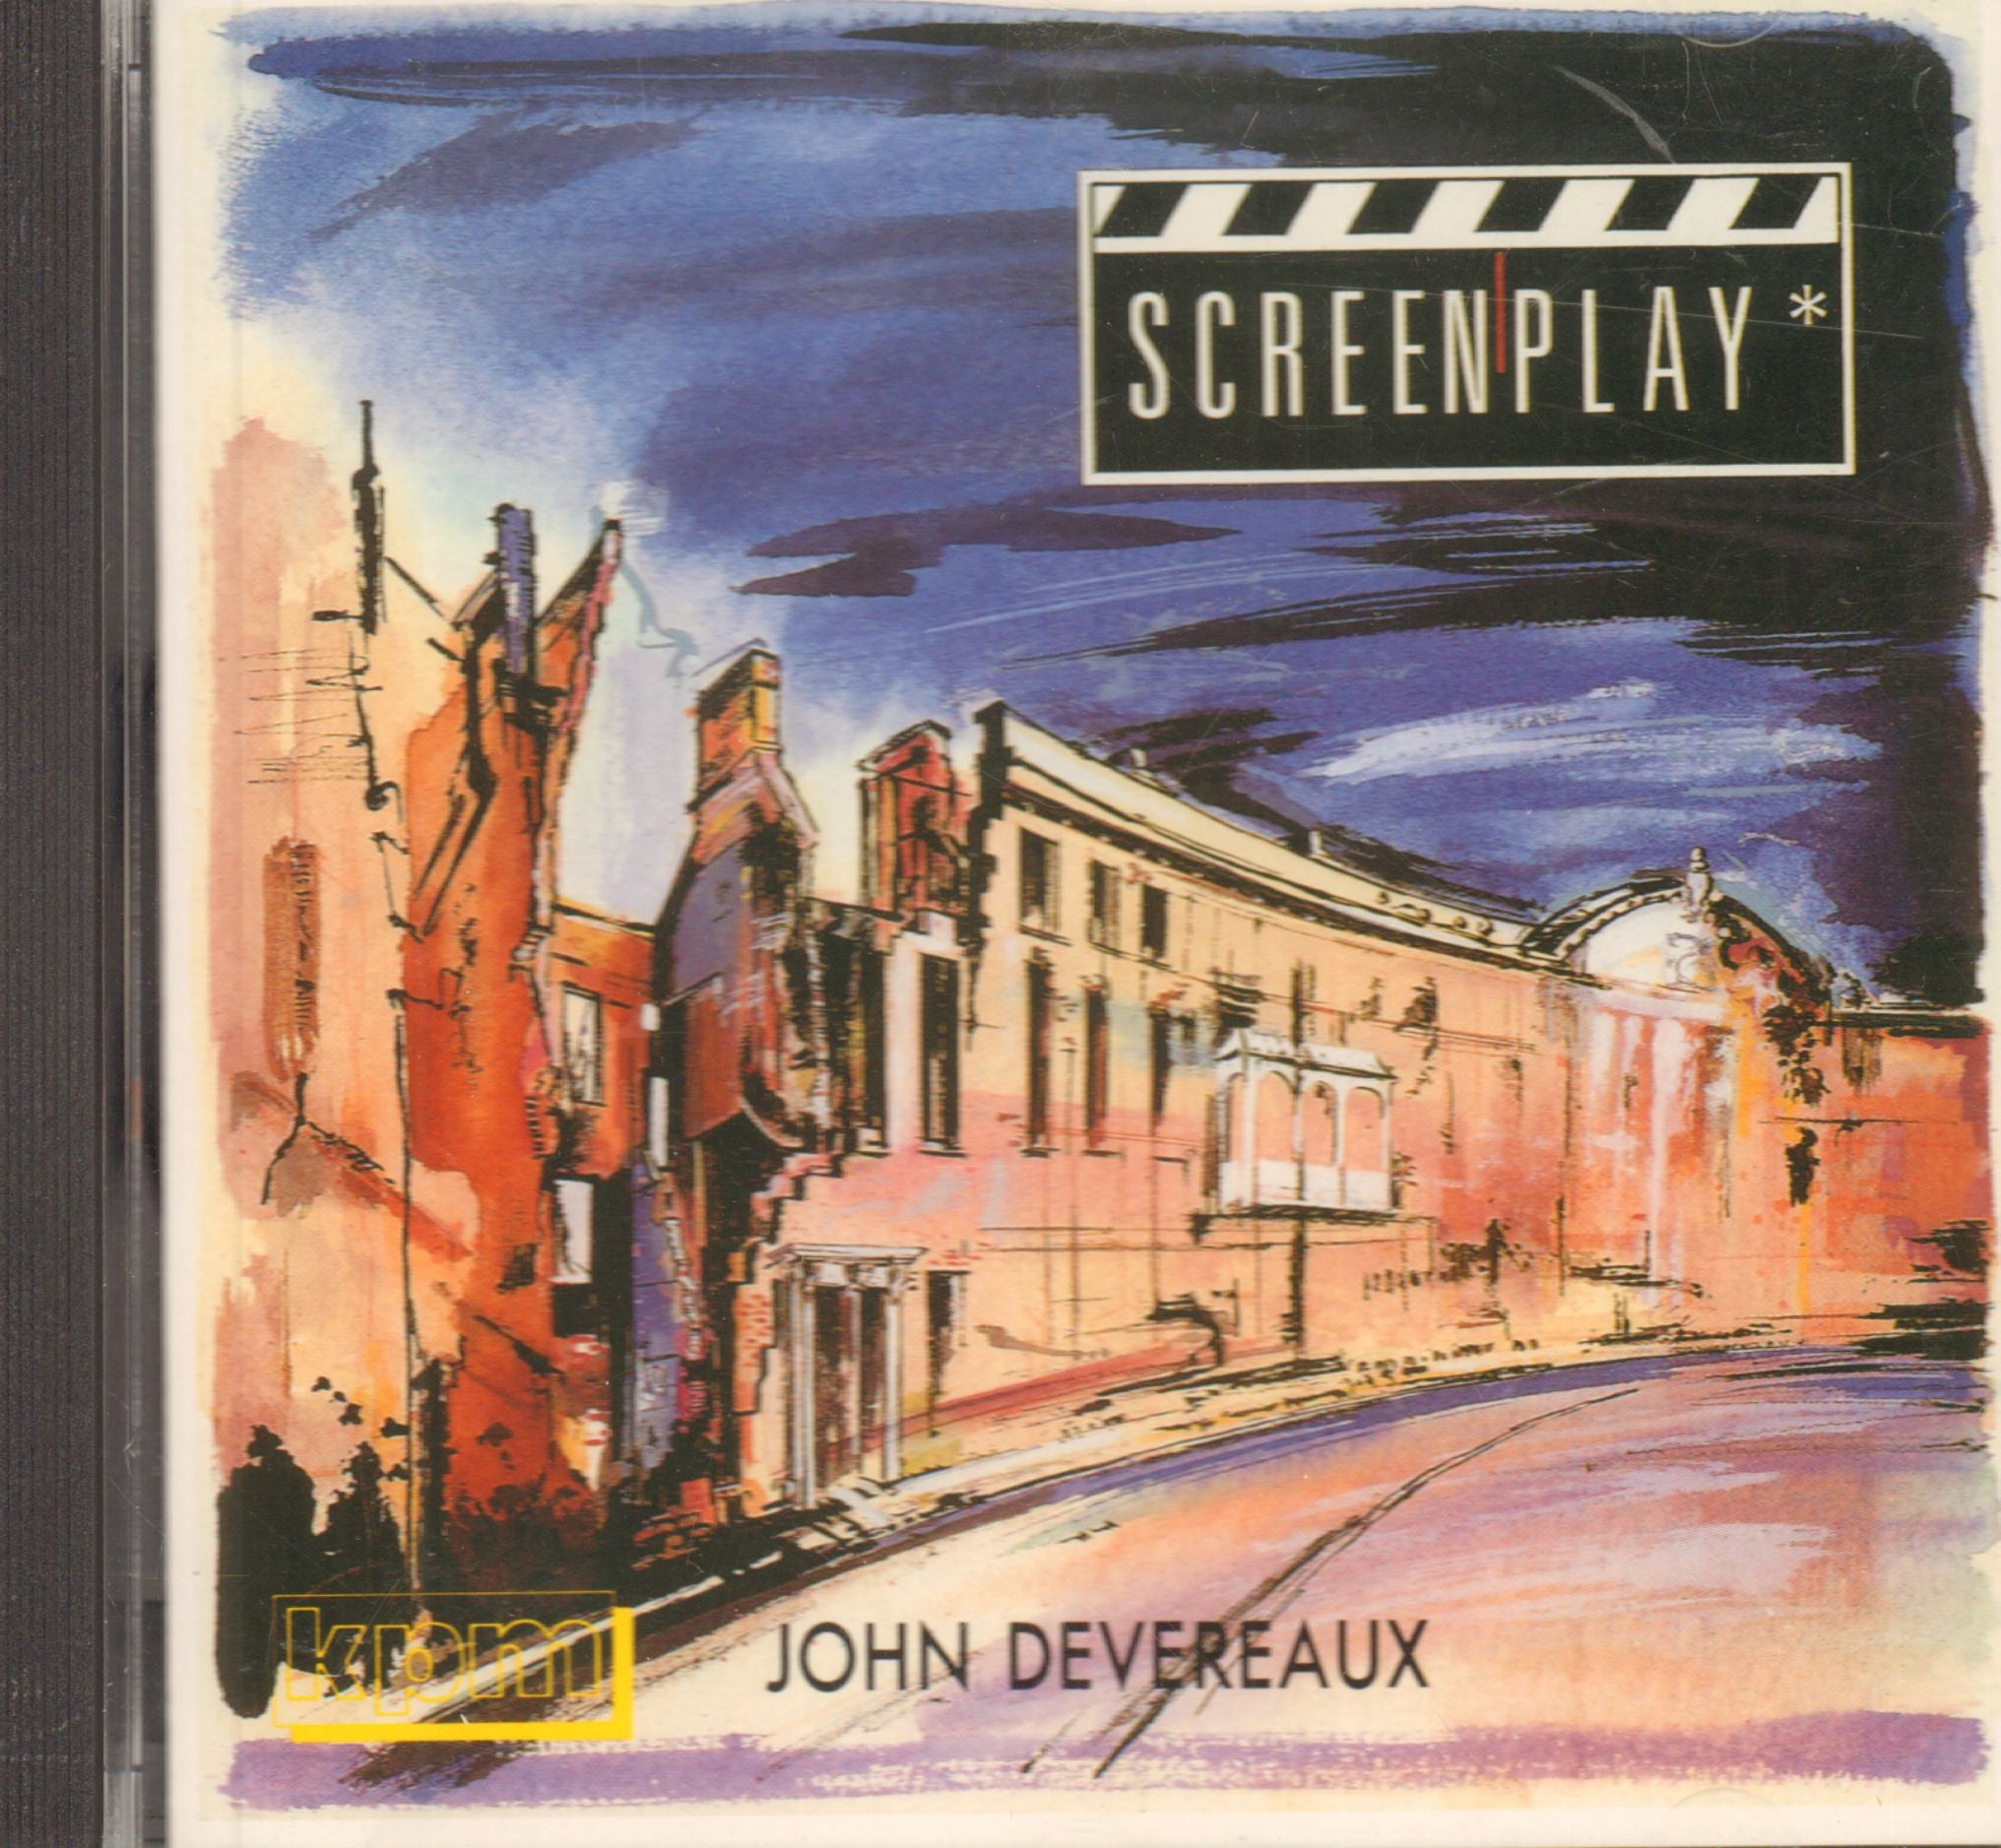 John Devereaux-Screenplay-CD Album-Very Good